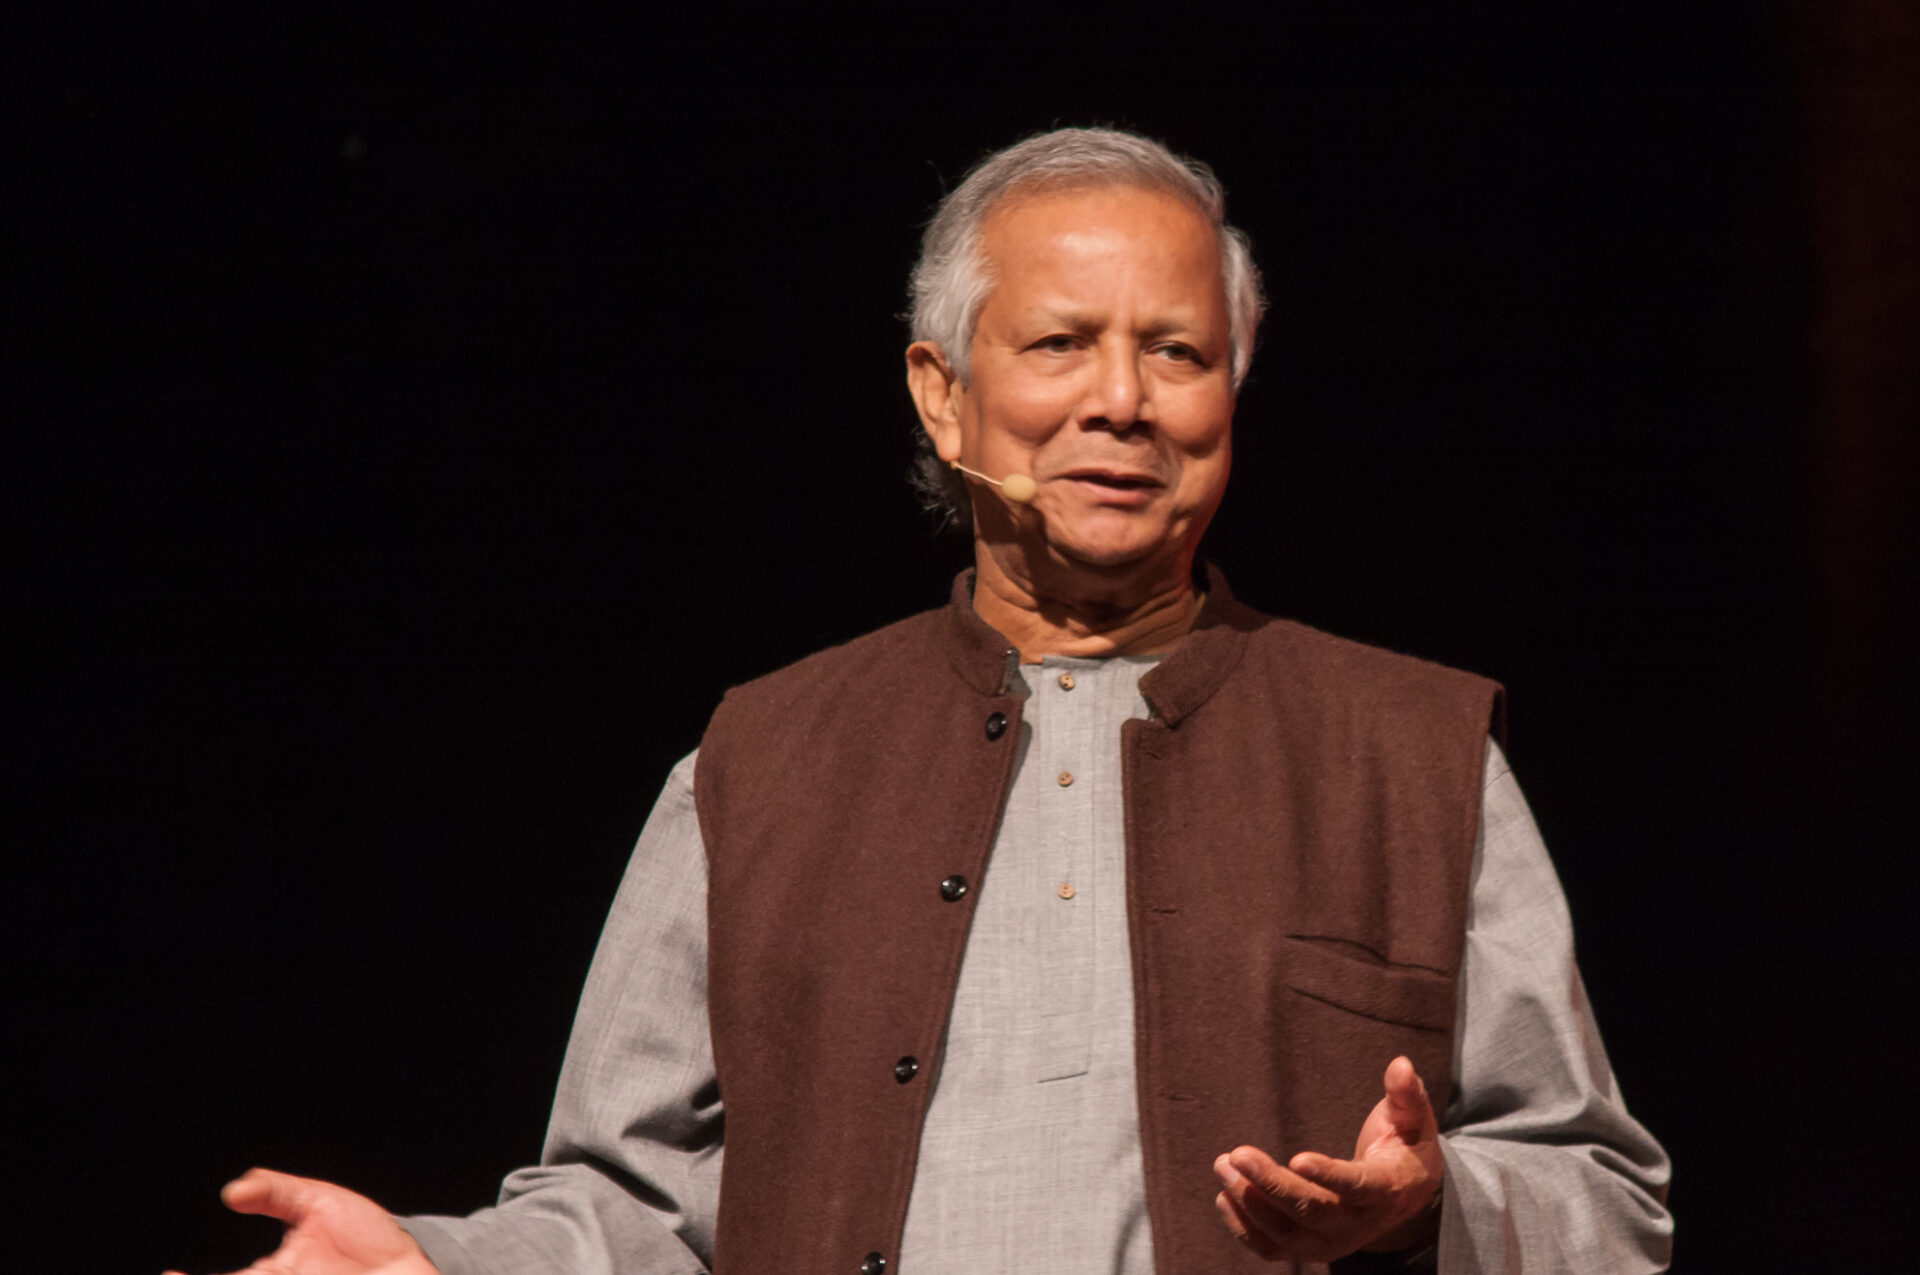 Muhammad Yunus, Prix Nobel de la paix 2006, sera l'un des signataires du document sur la fraternité. Ici en 2013| © Martin Kraft (photo.martinkraft.com) / CC BY-SA 3.0 via Wikimedia Commons